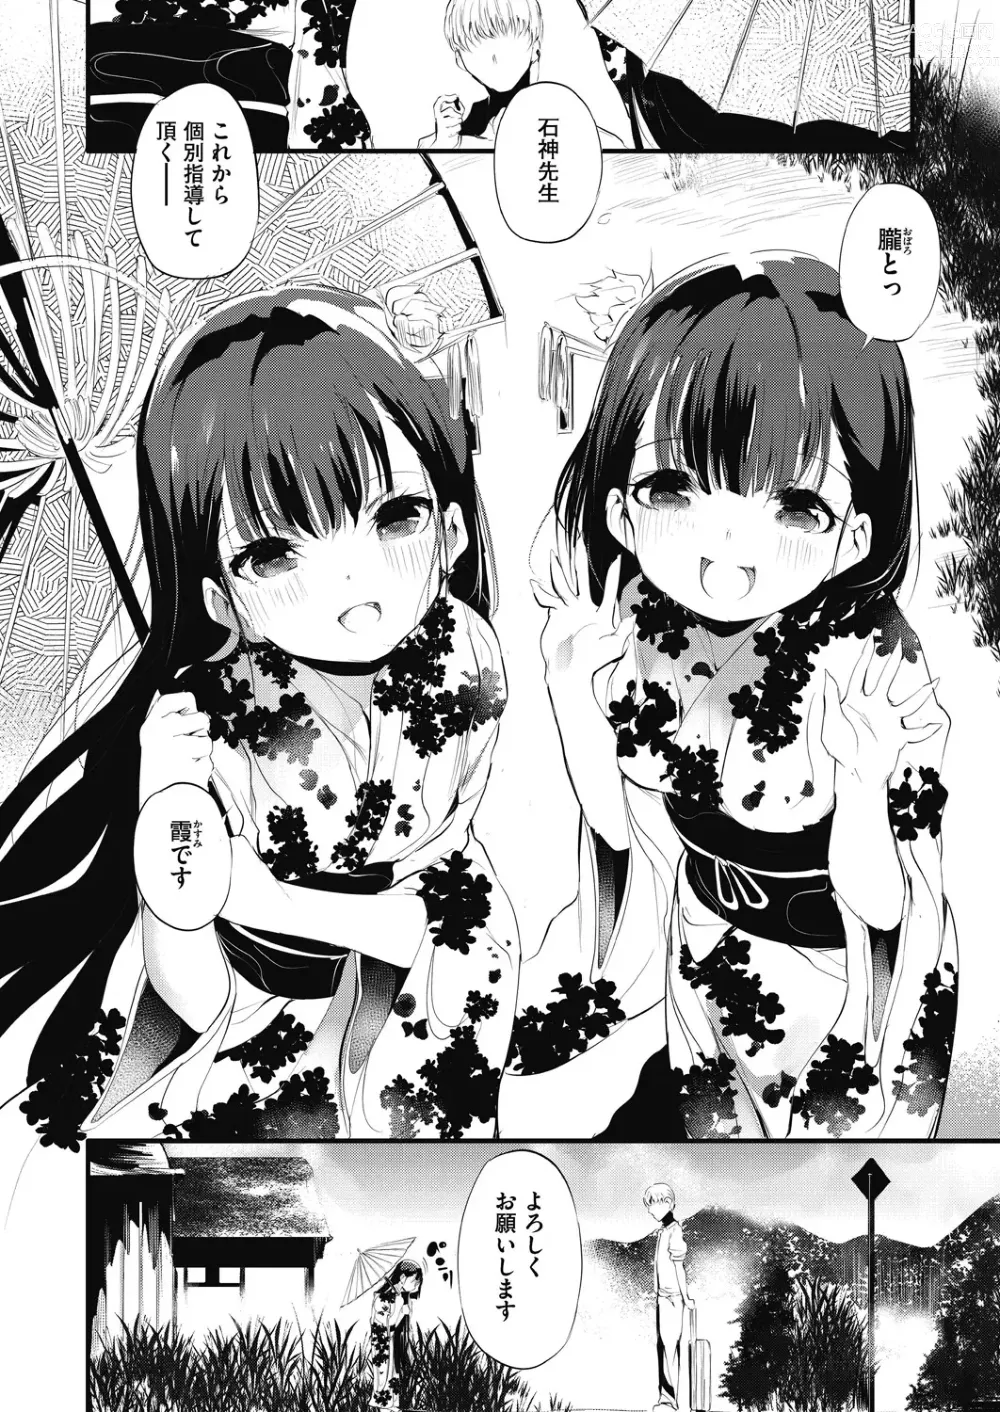 Page 10 of manga Shinme Tori - symmetry